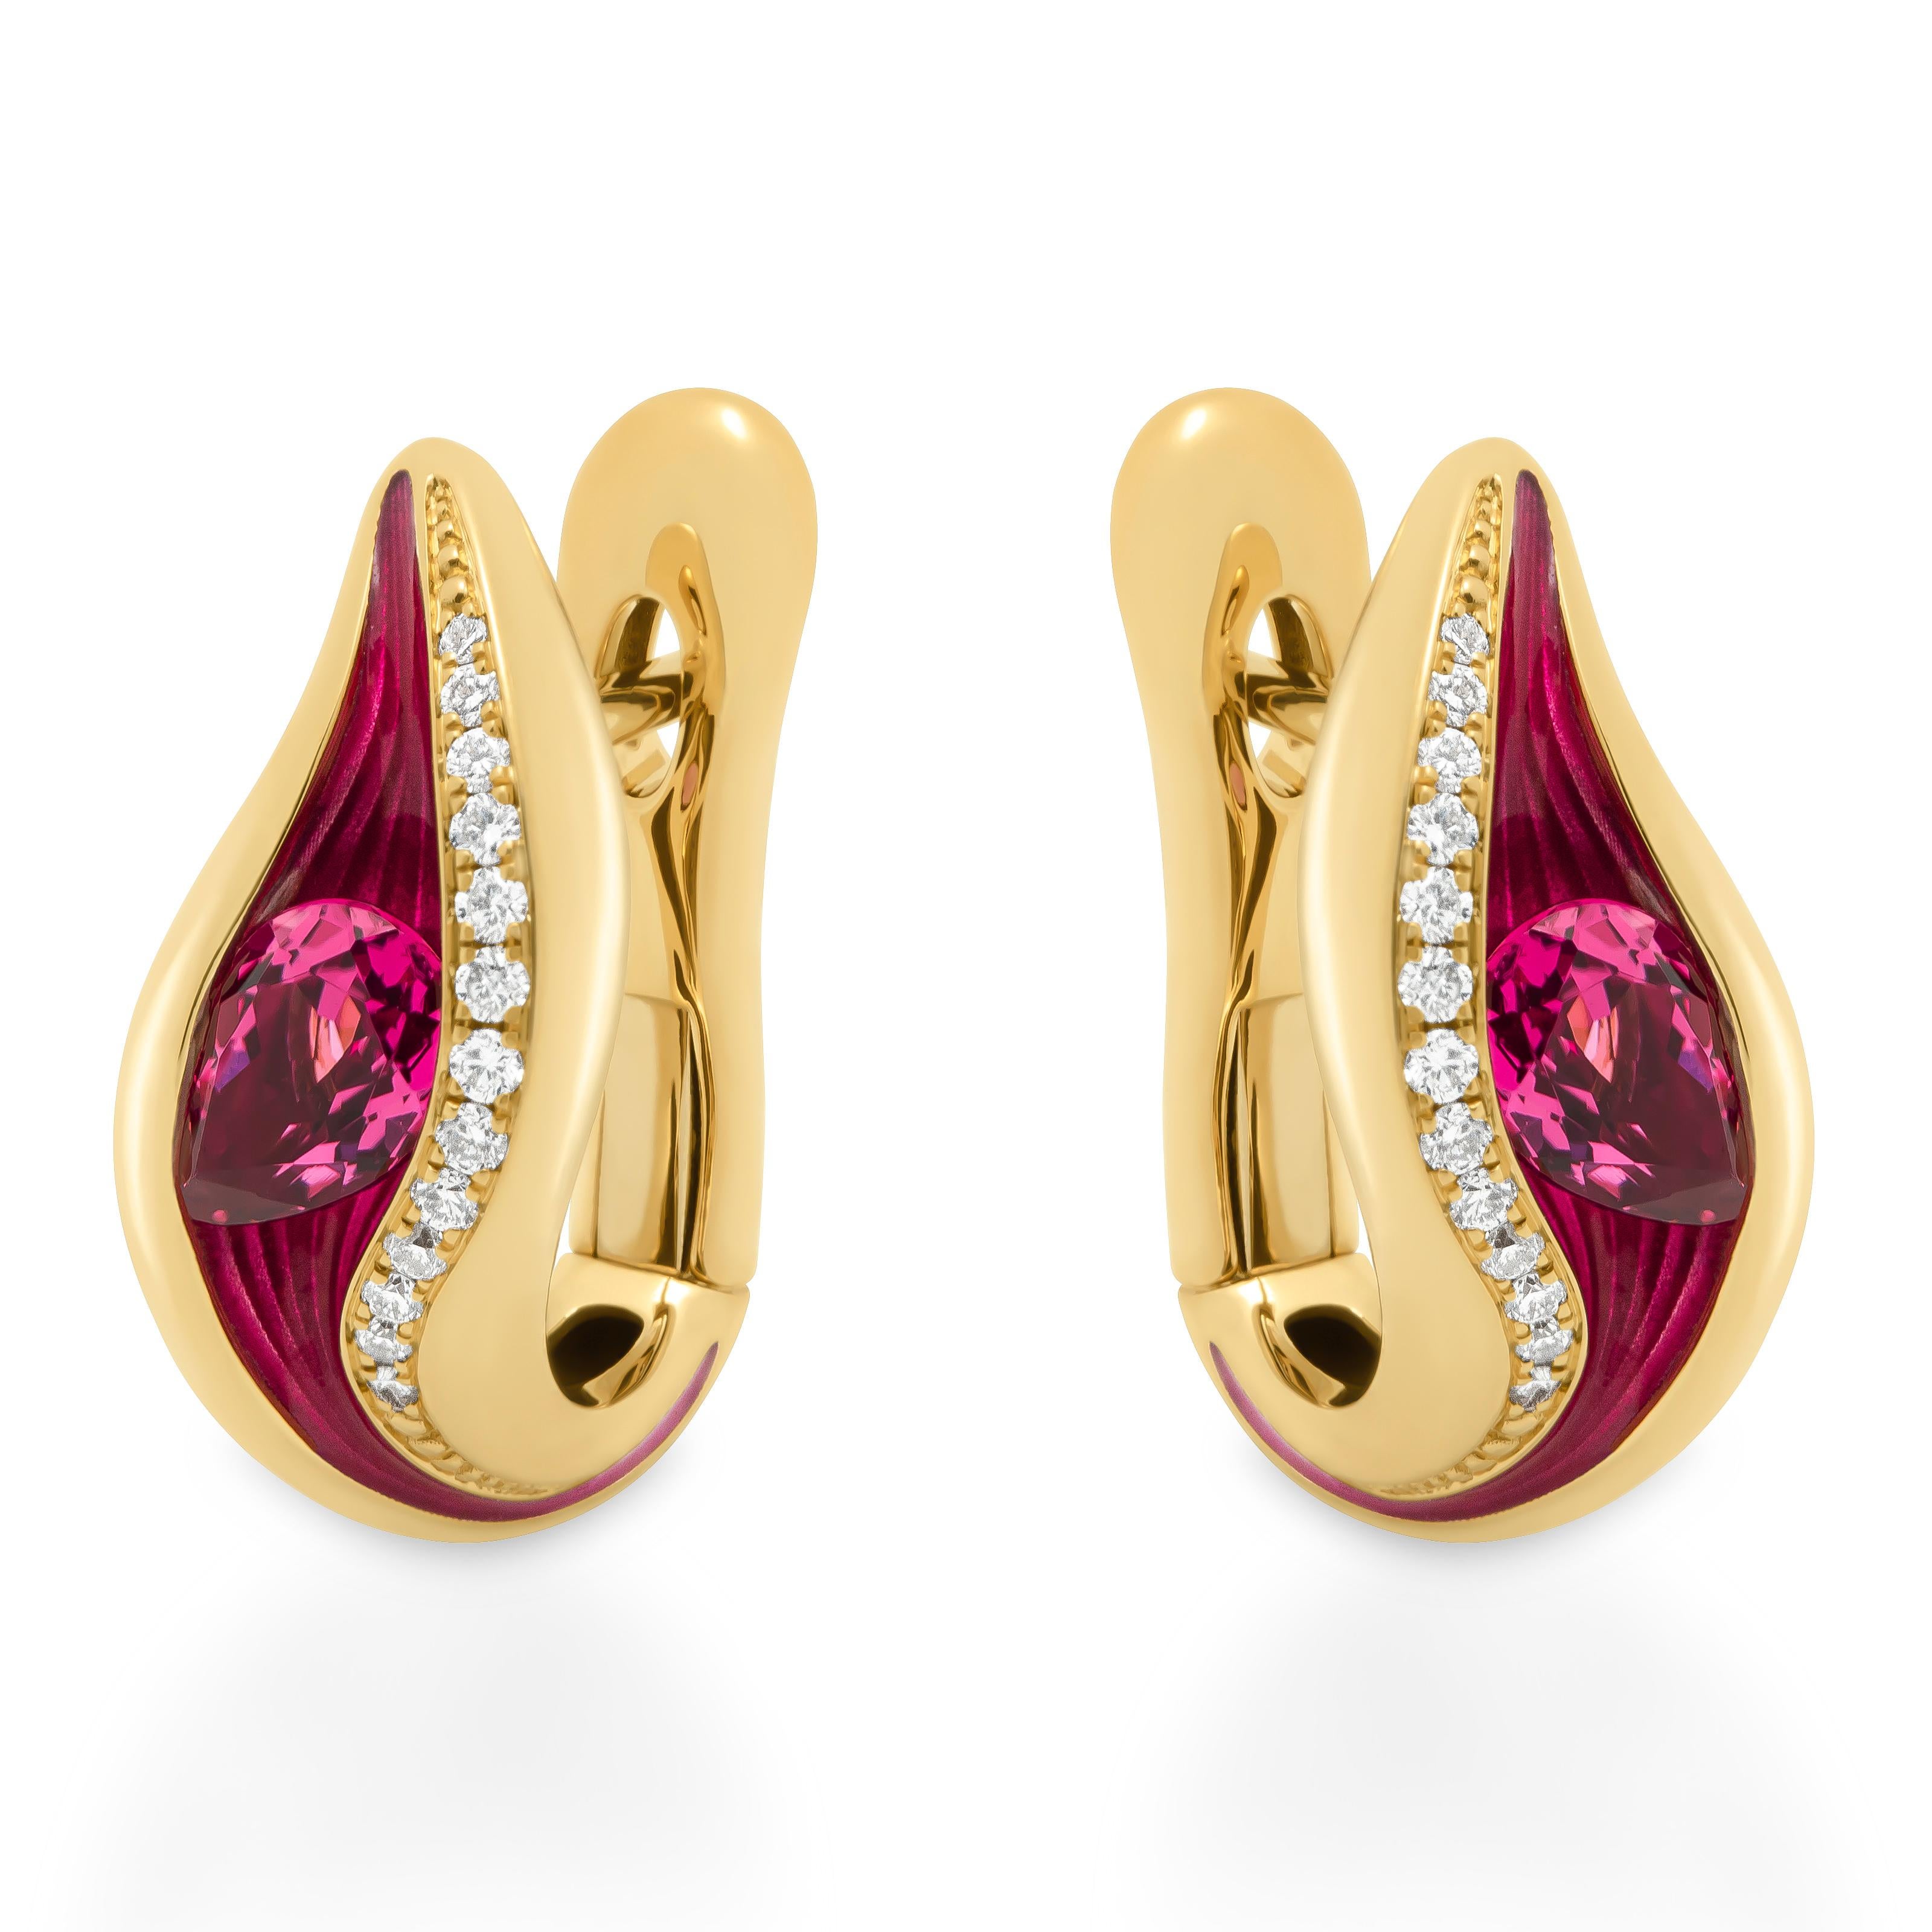 Rosa Turmalin Diamanten Emaille 18 Karat Gelbgold Geschmolzene Farben Ohrringe
Unsere neue Kollektion 